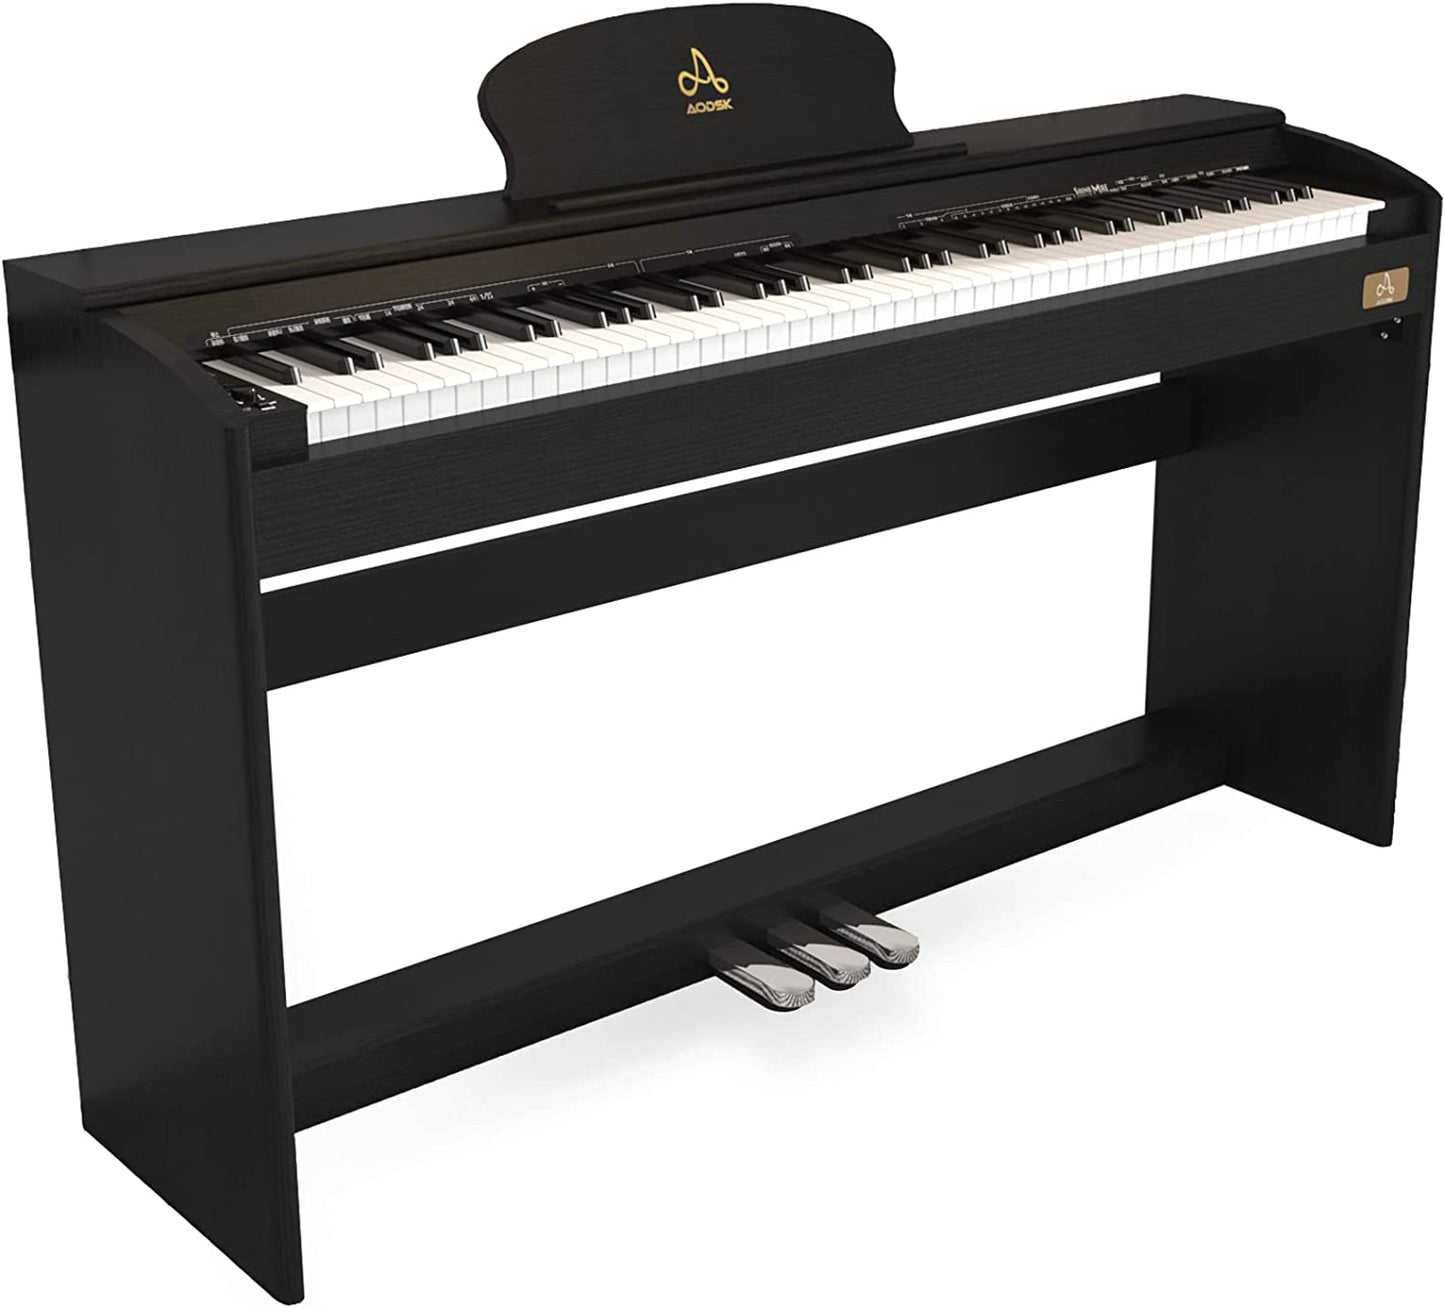 AODSK B-83 Digital Piano,88 Keys Electric Keyboard Piano for Beginner Kids/Adults Beginner Digital Piano-Black